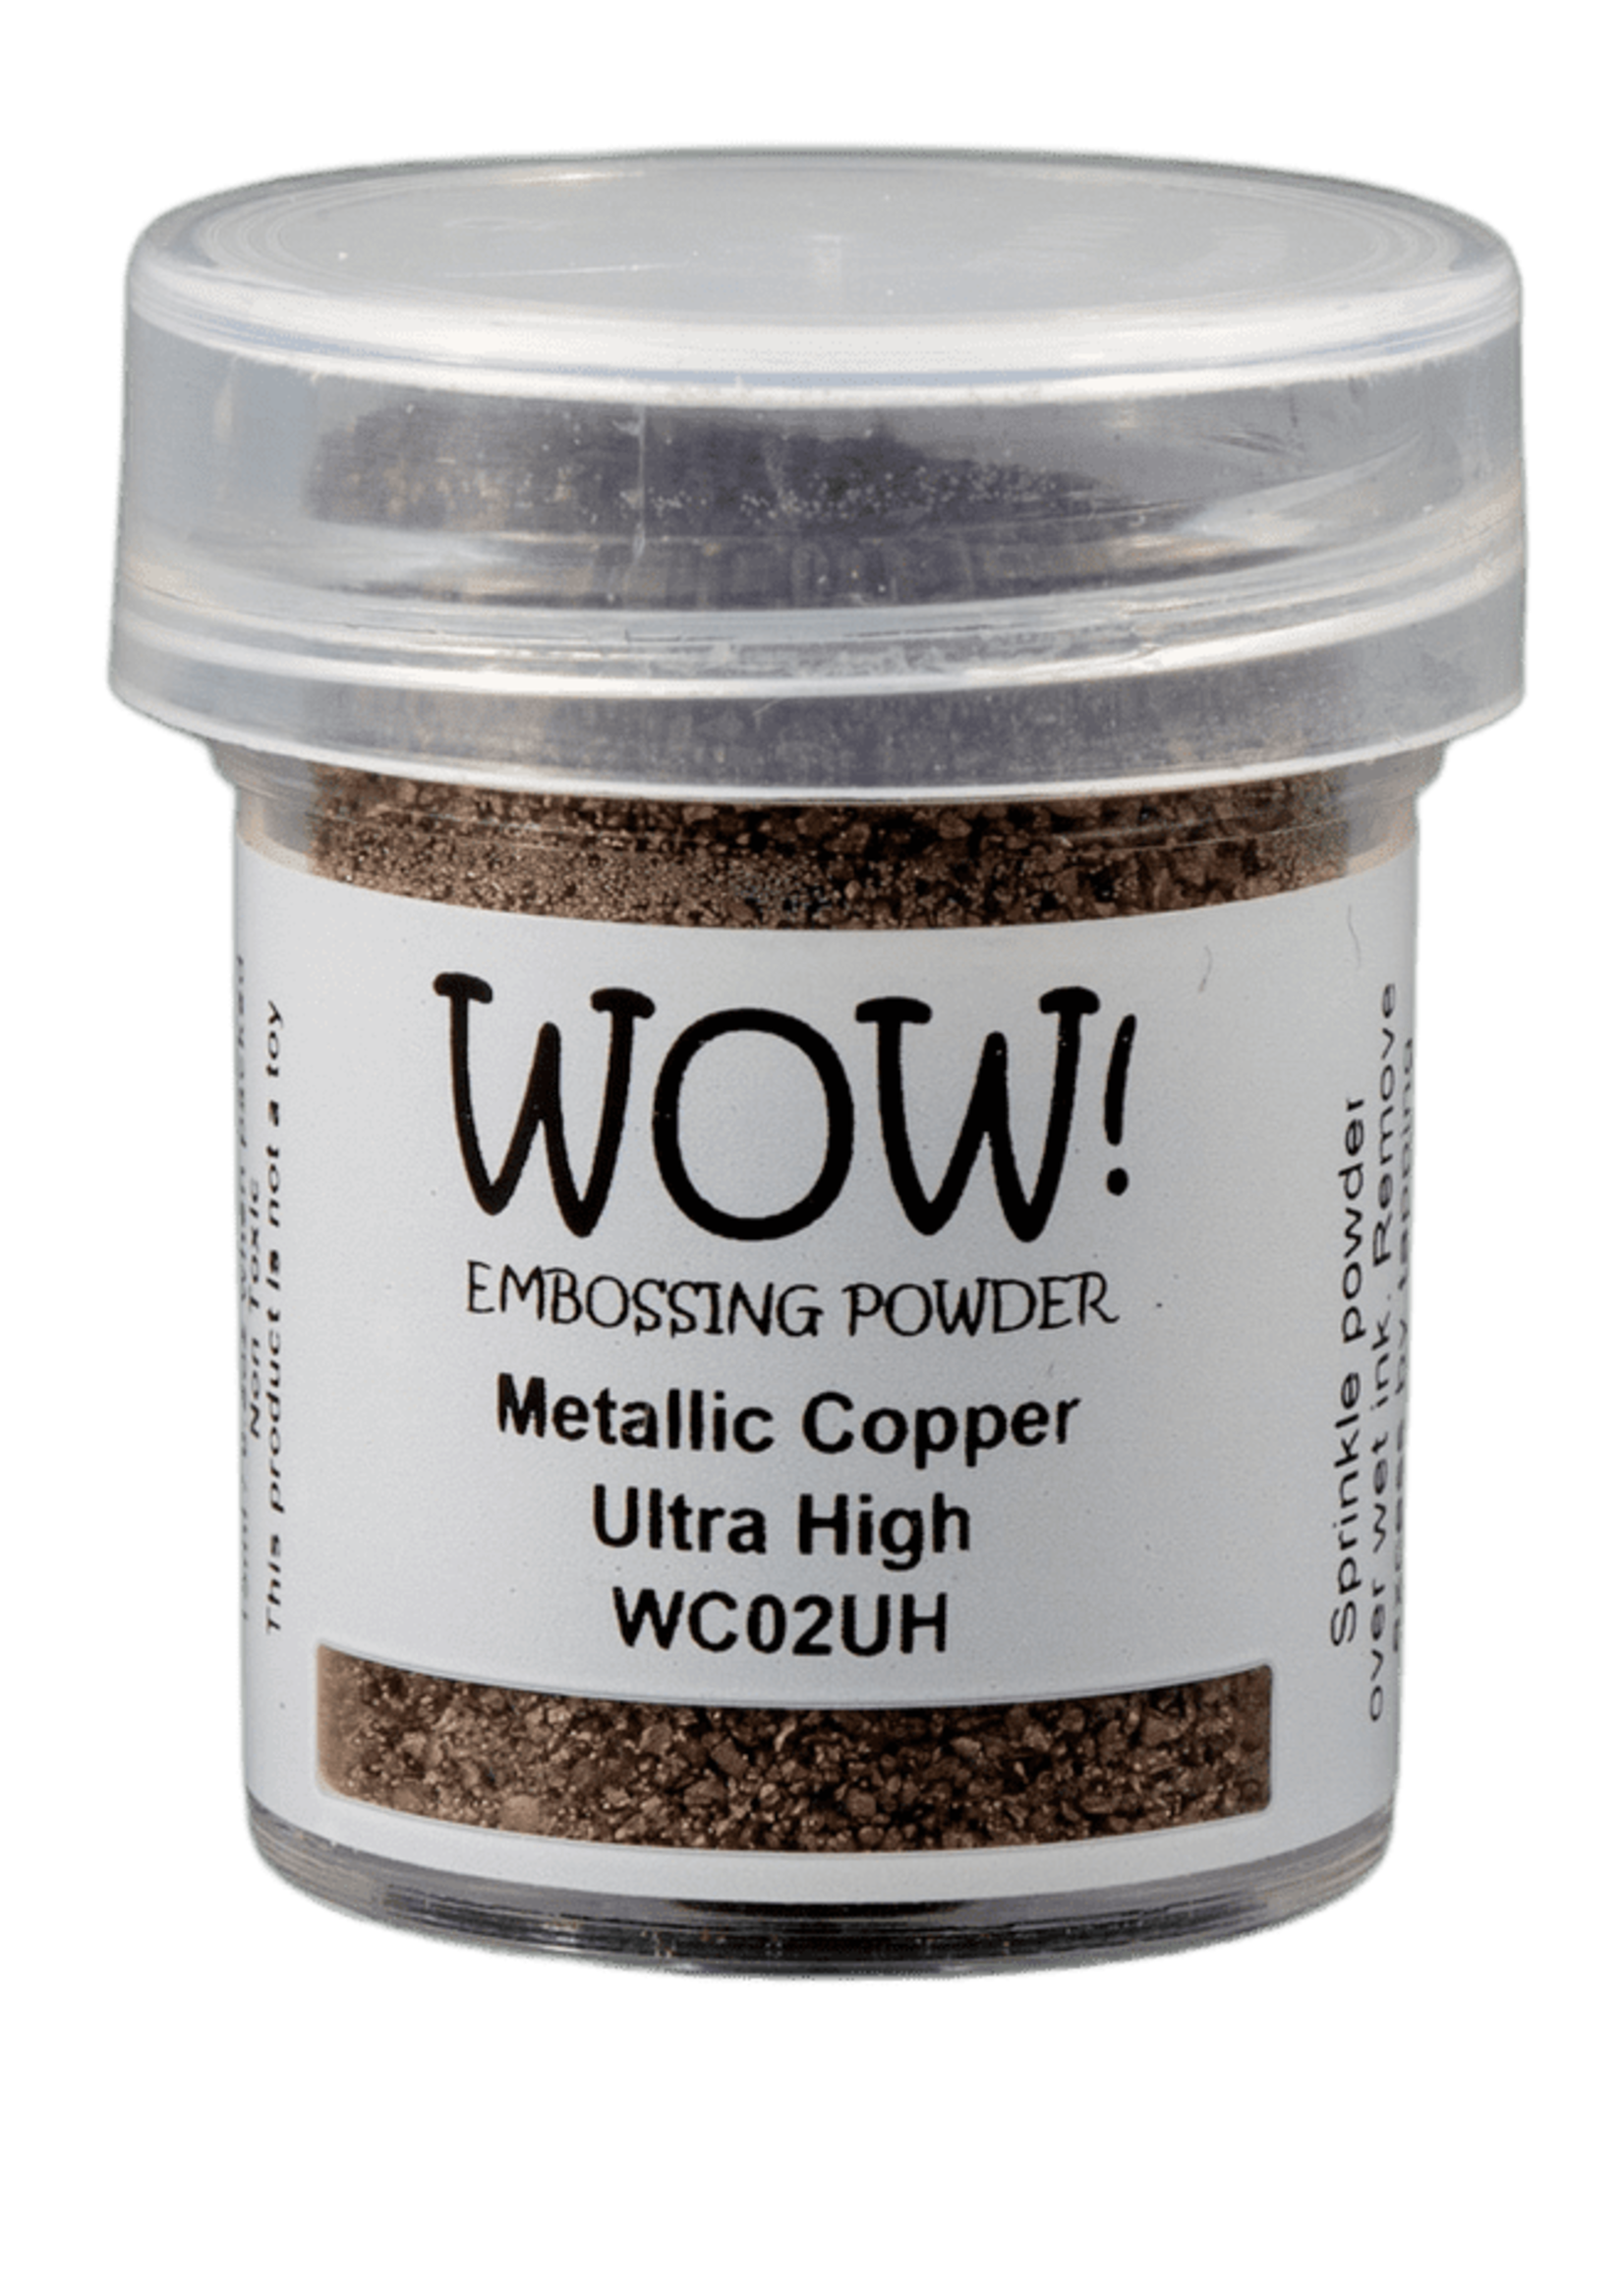 wow! Wow!Ultra High: Metallic Copper